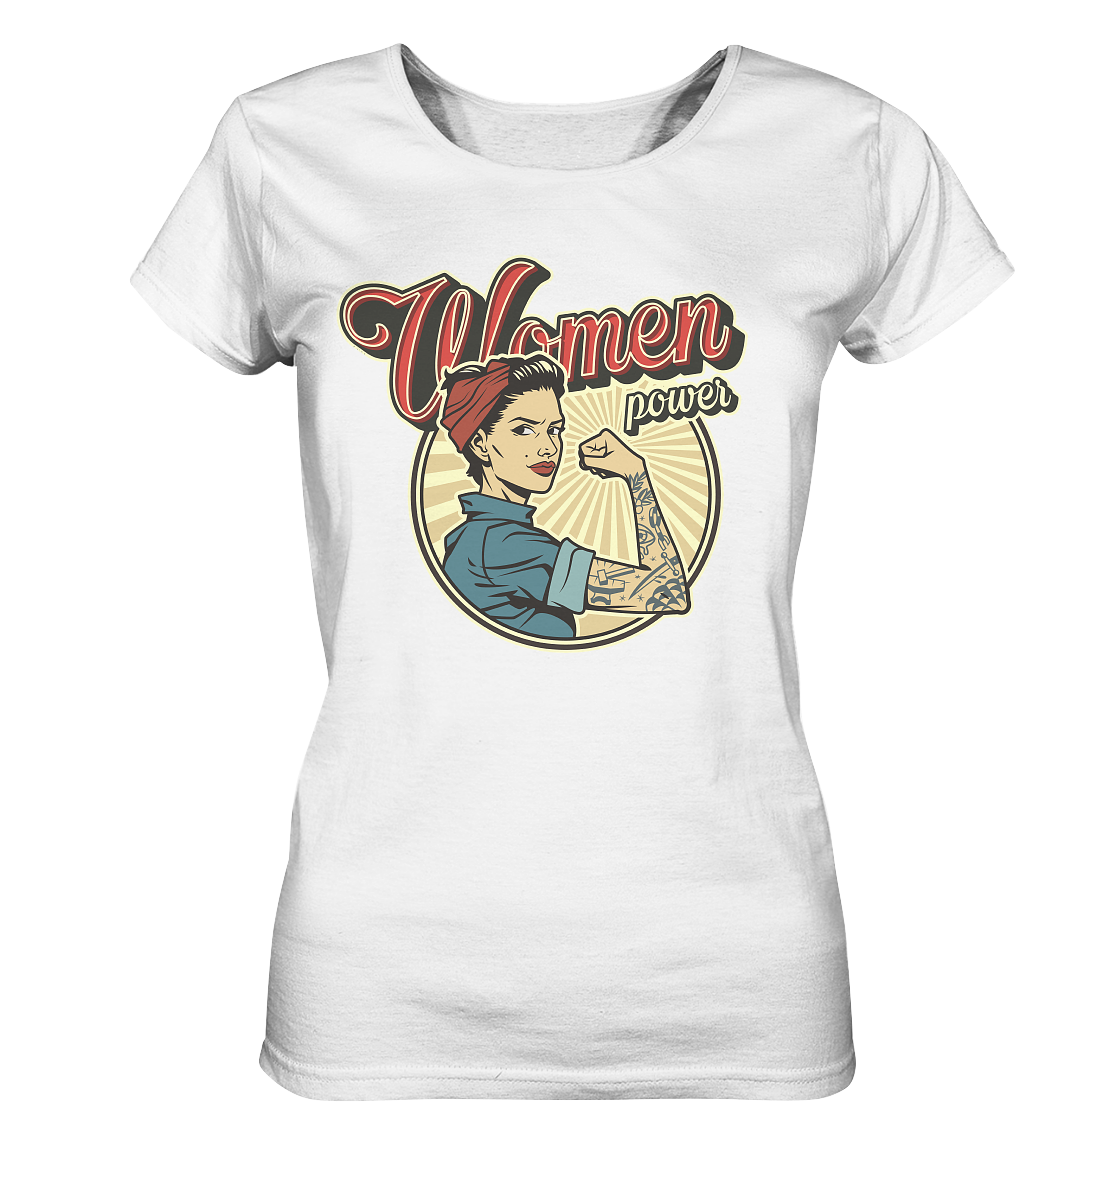 Women Power - Ladies Organic Shirt